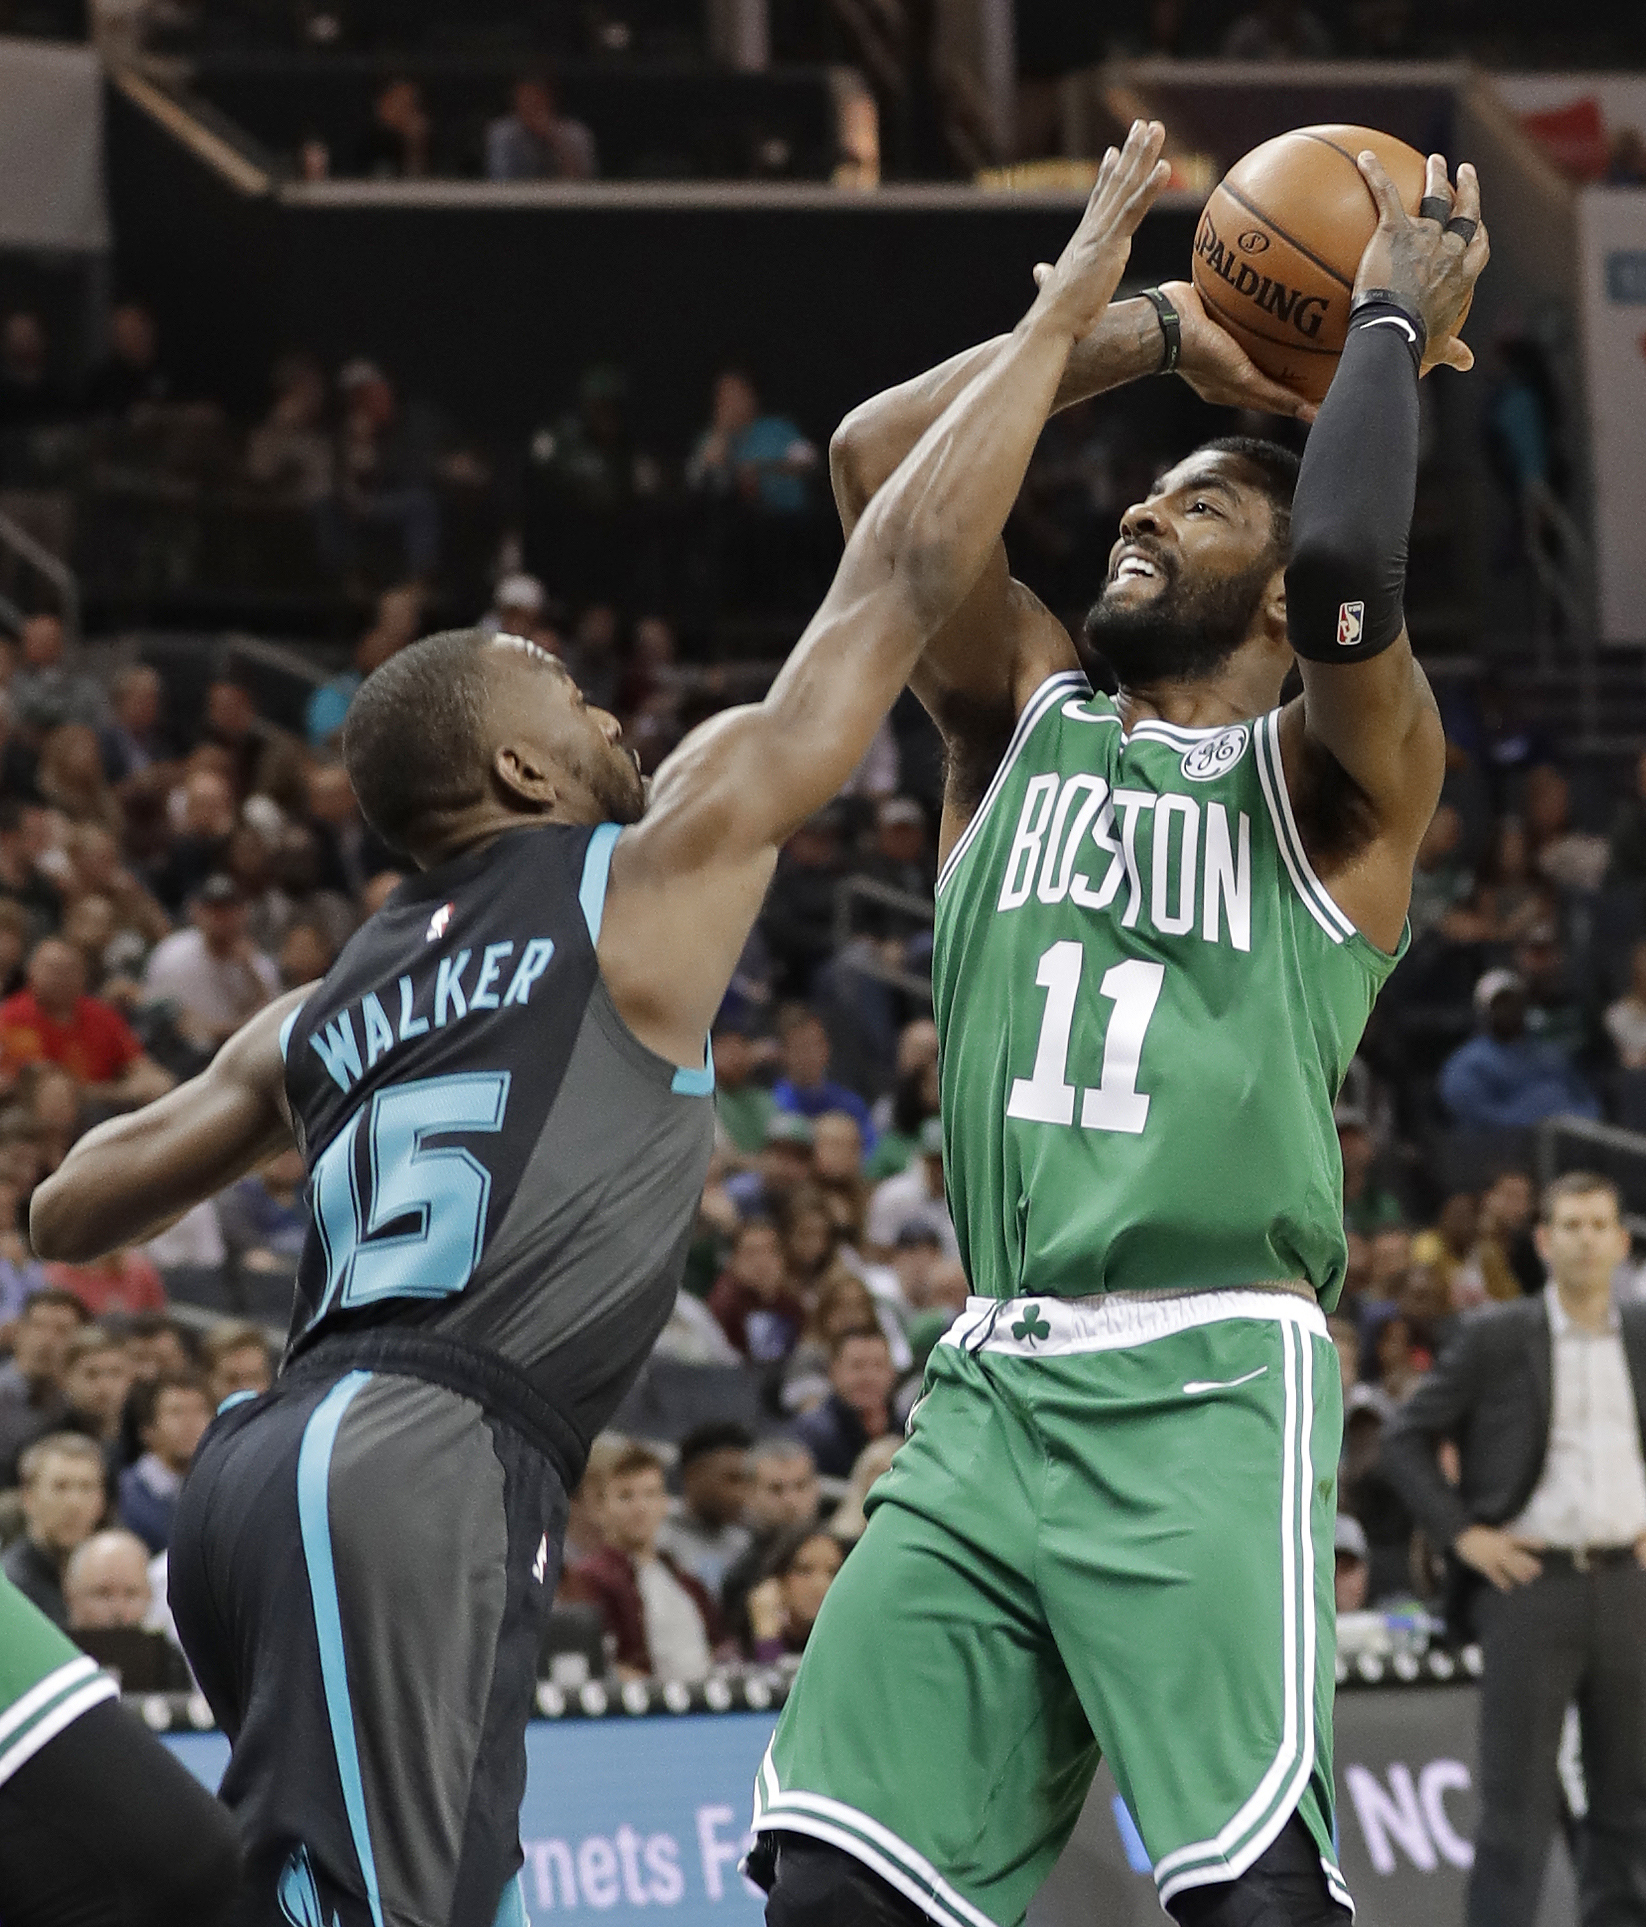 Walker stays hot, scores 43 as Hornets upend Celtics 117-112